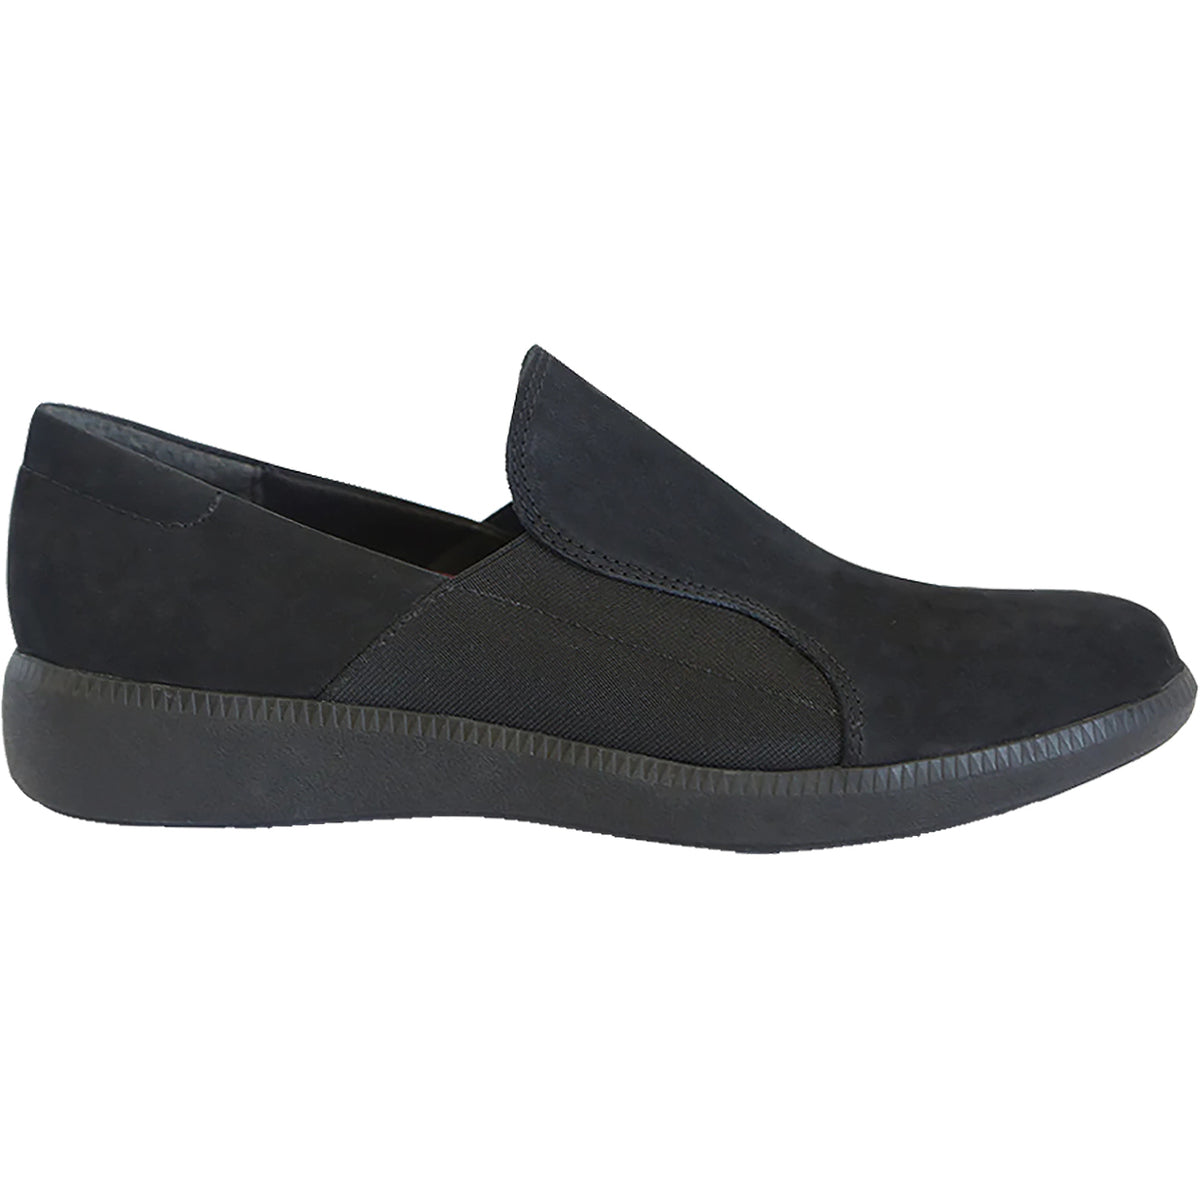 Munro Clay | Women's Slip-On Shoes | Footwear etc.